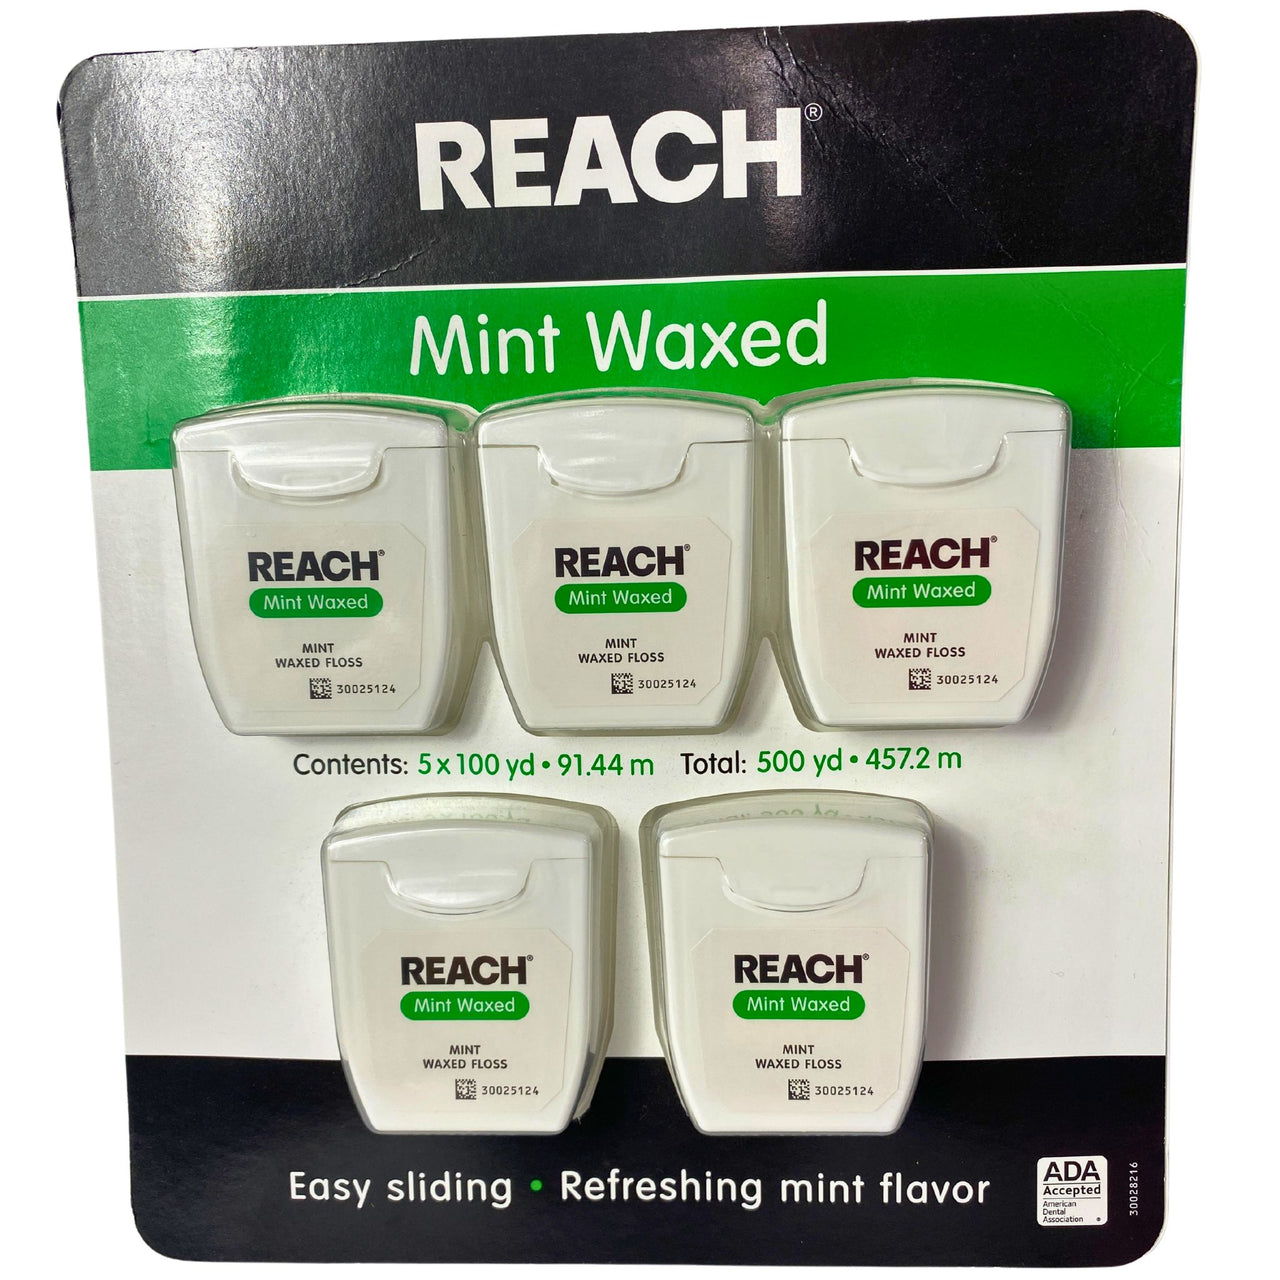 Reach Mint Waxed Easy Sliding Refreshing Mint Flavor